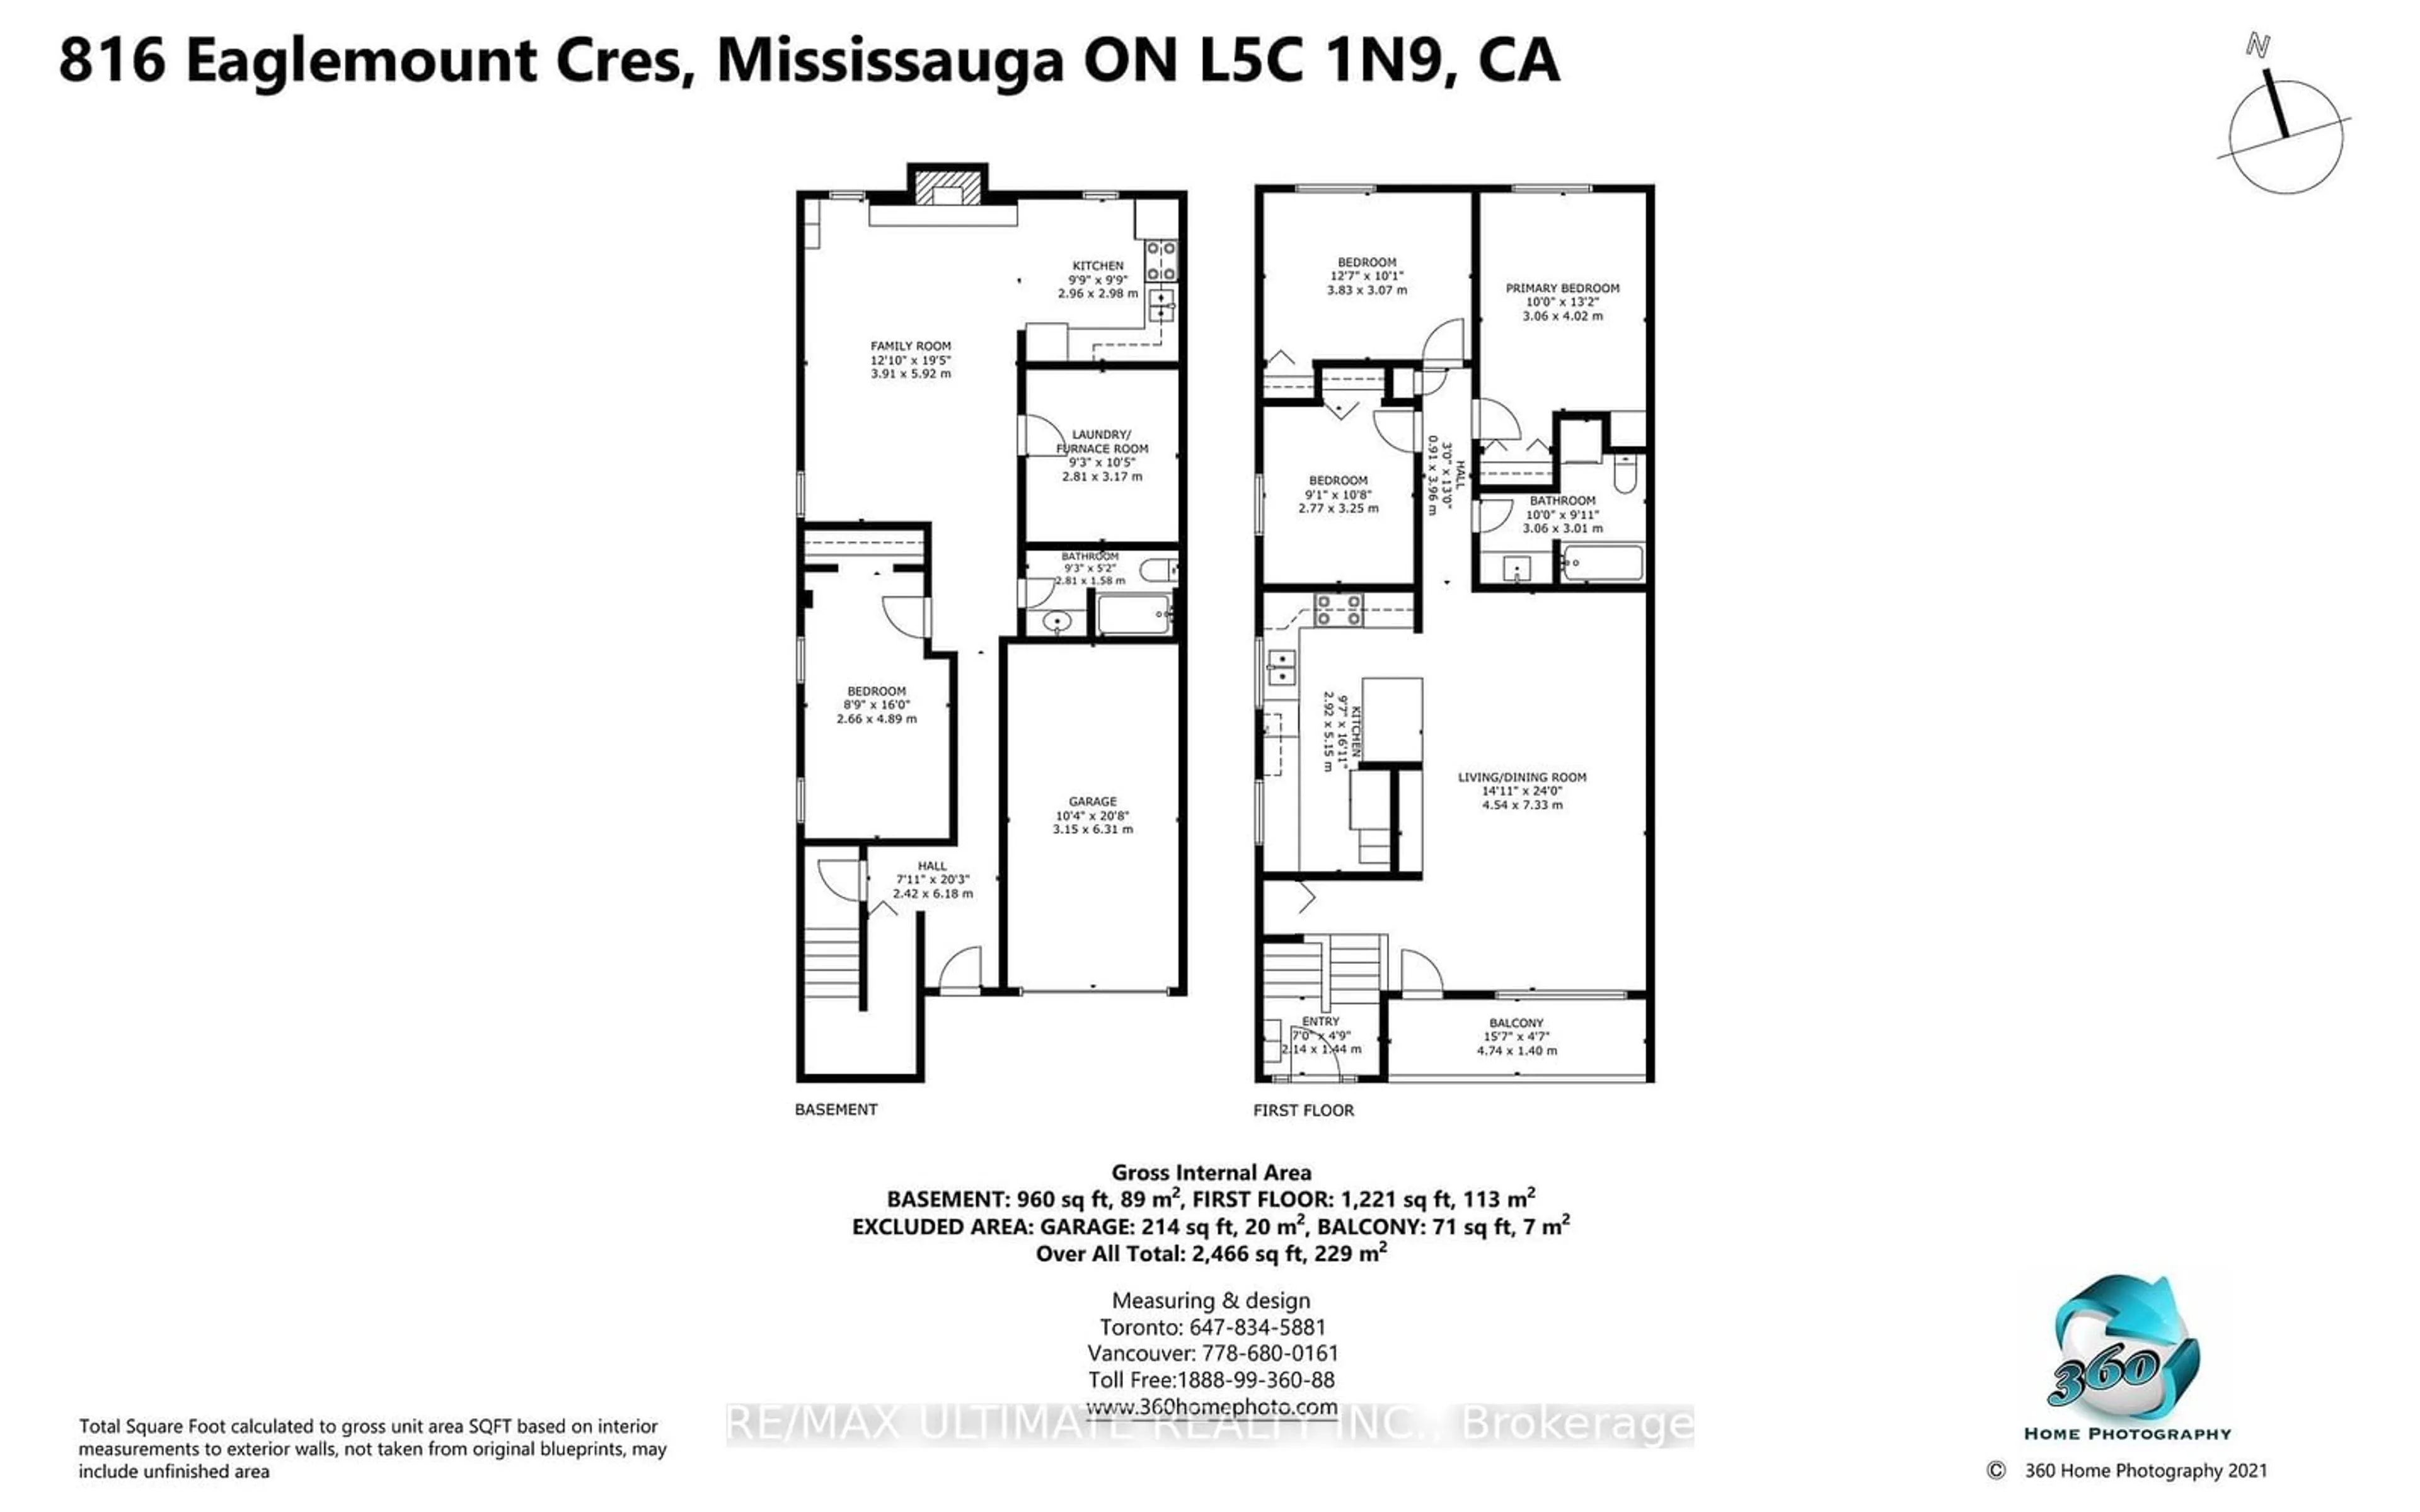 Floor plan for 816 Eaglemount Cres, Mississauga Ontario L5C 1N9